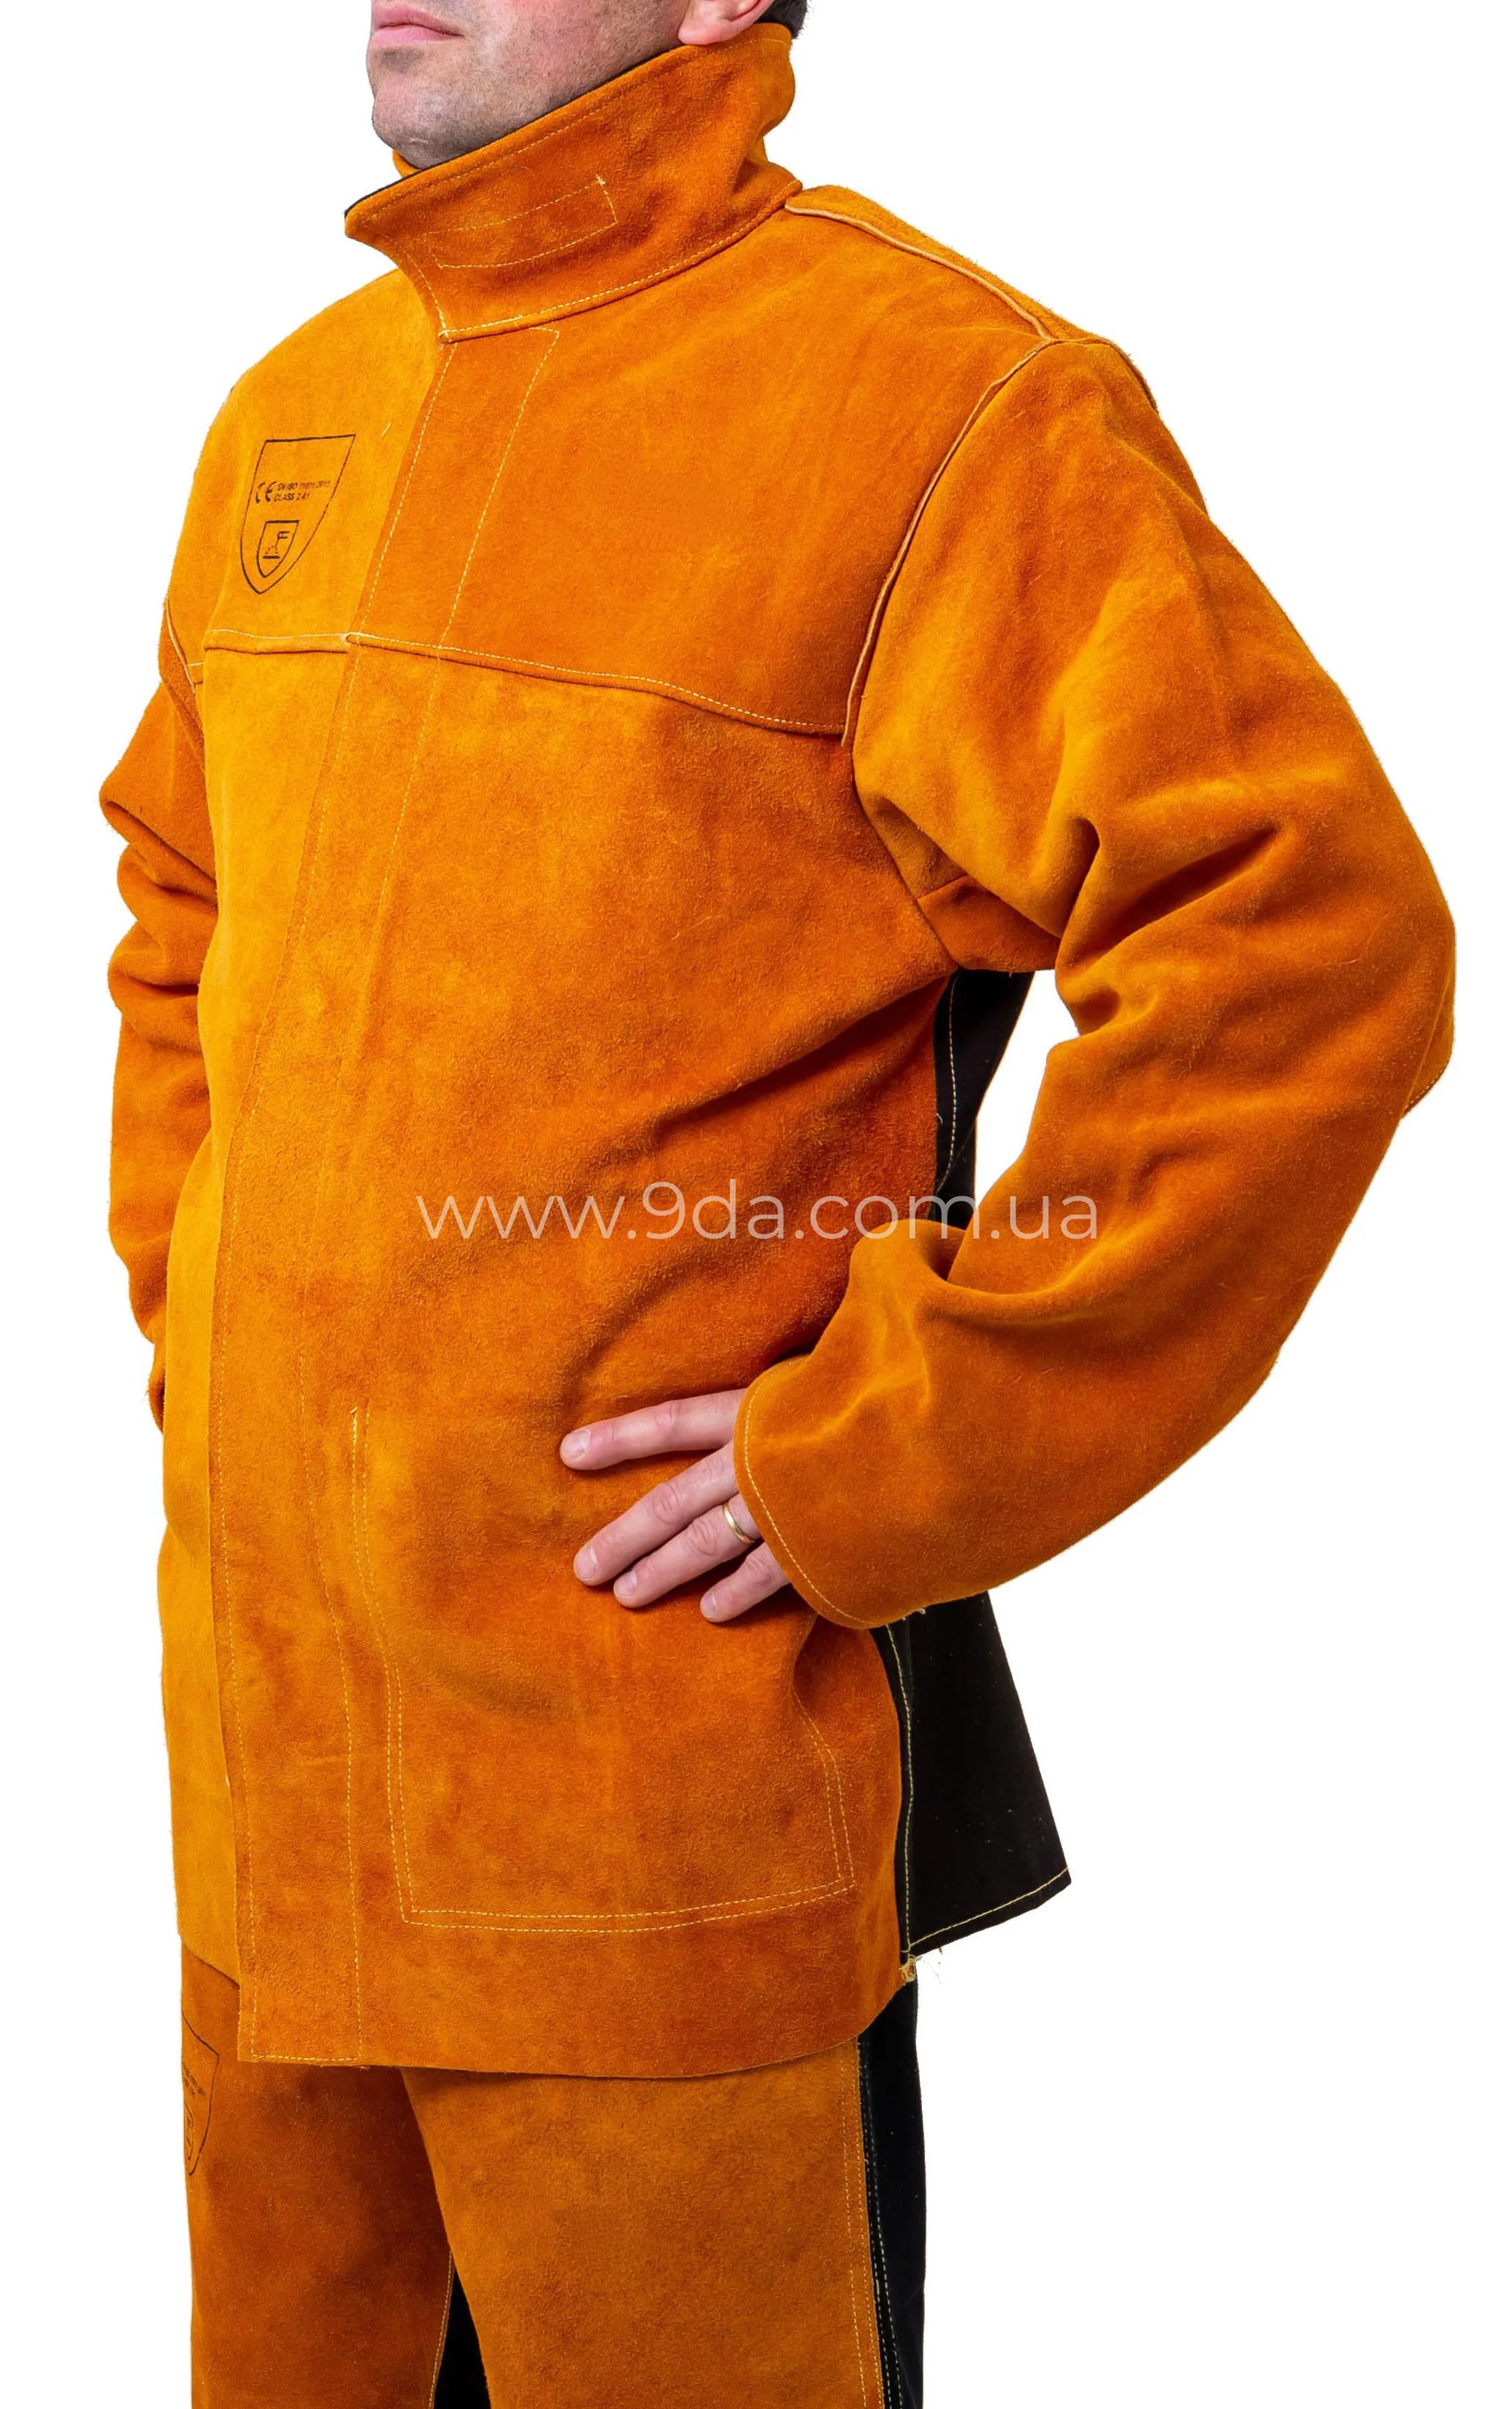 Куртка зварювальника, шкіряна, FR Front - Leather, Back Jacket Proban, size L - 5